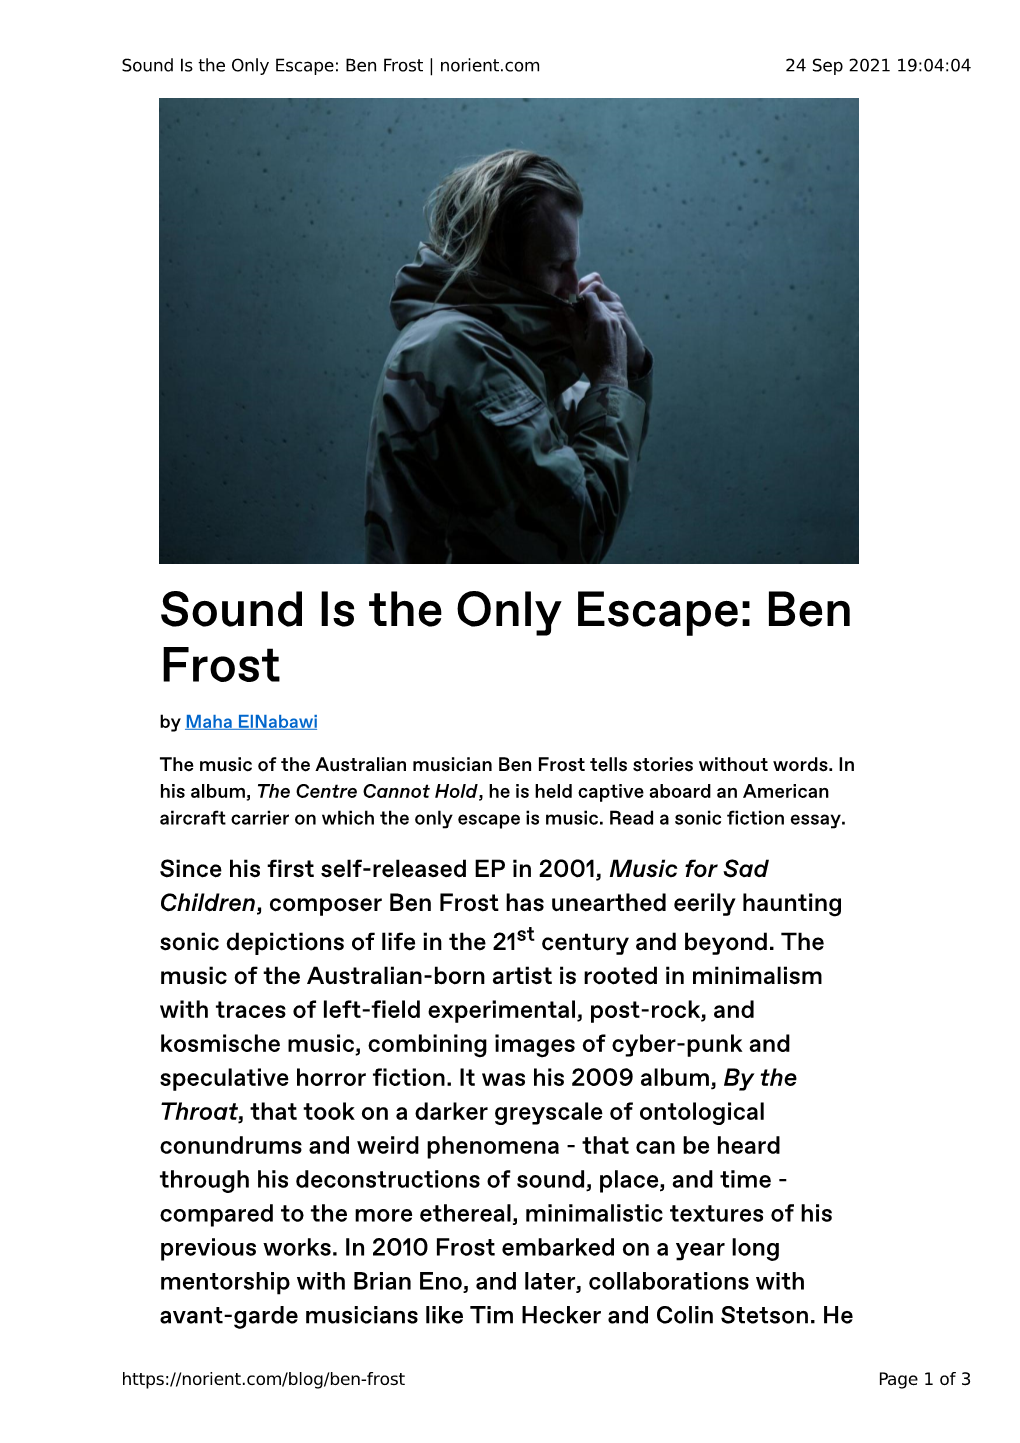 Sound Is the Only Escape: Ben Frost | Norient.Com 24 Sep 2021 19:04:04